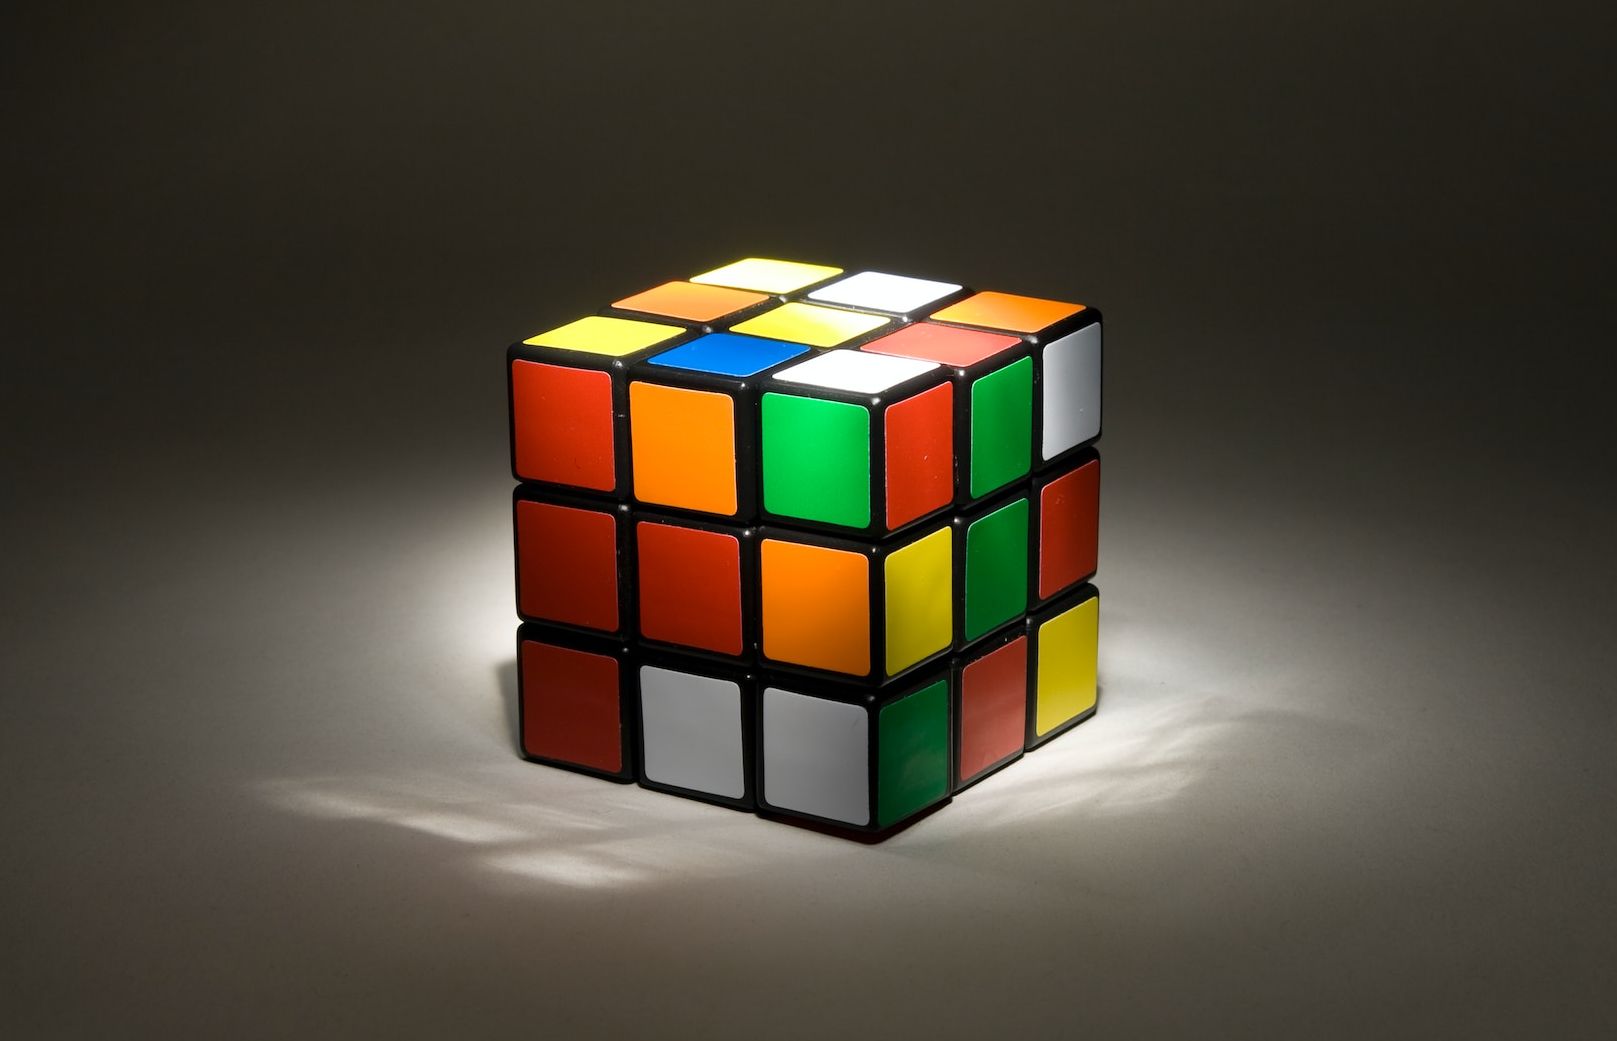 Робота научили собирать кубик Рубика быстрее пяти секунд